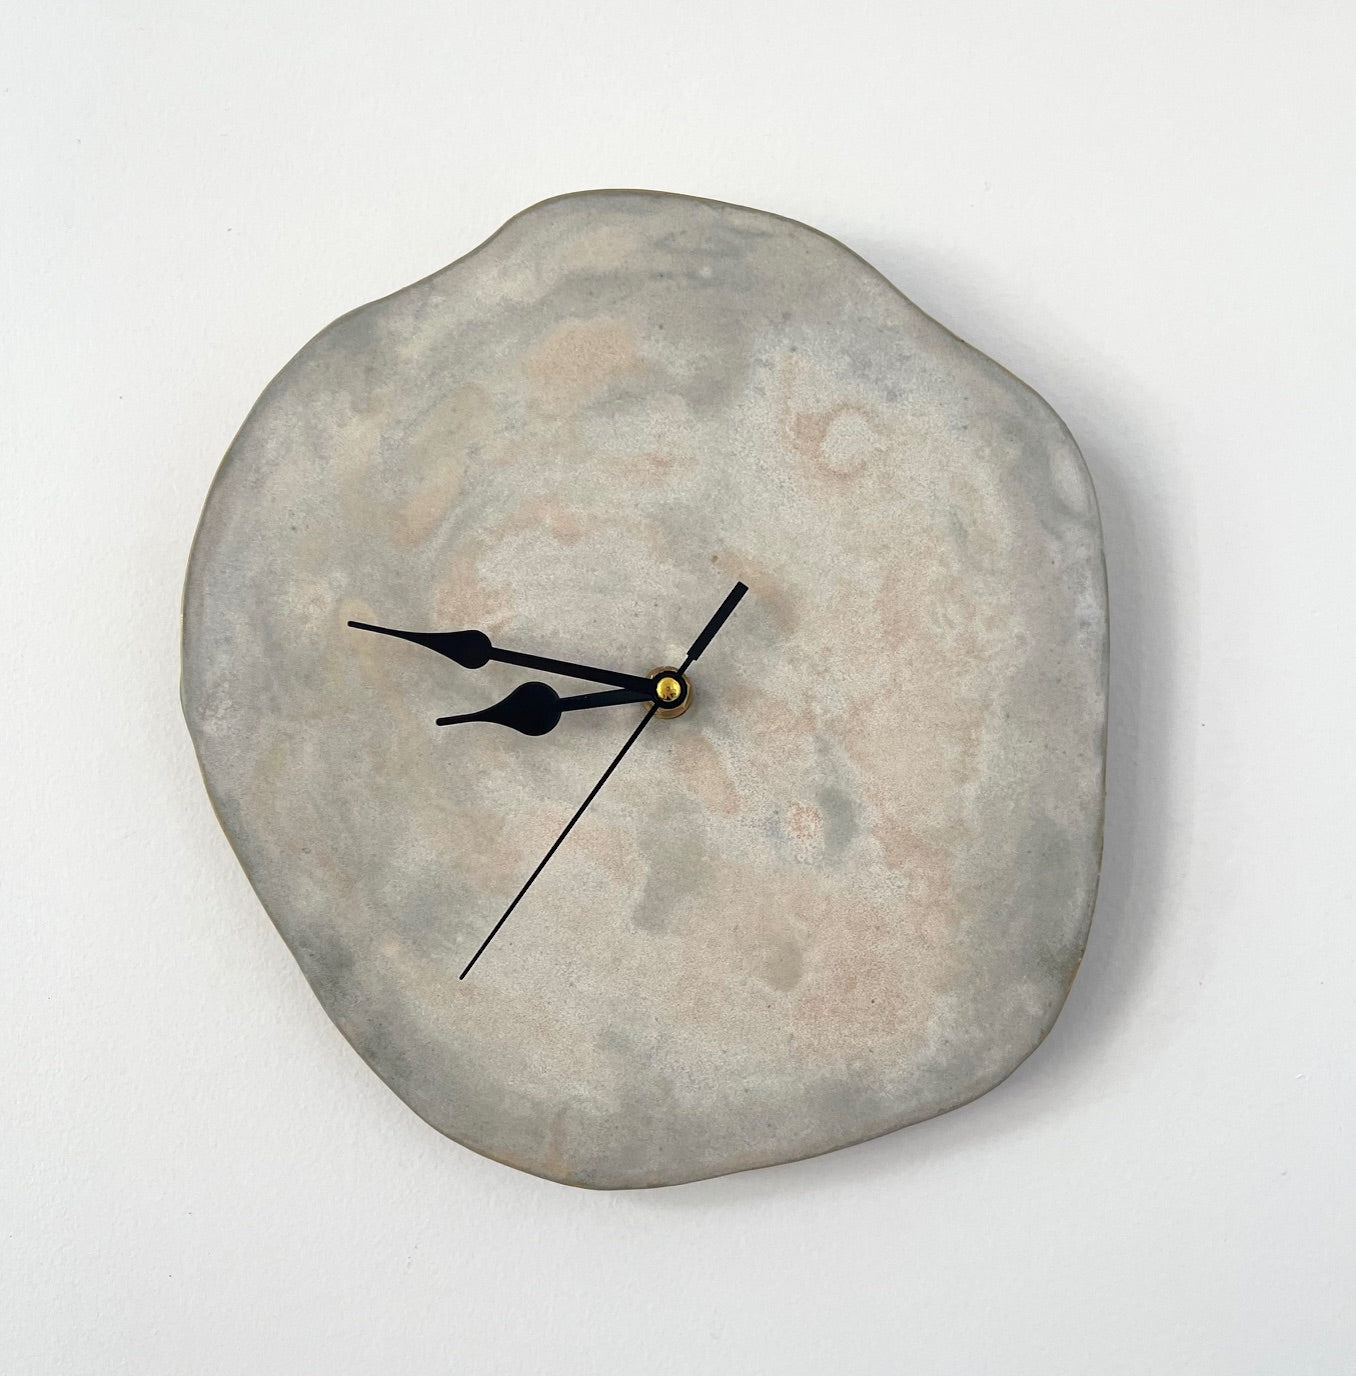 Handmade ceramic art clock